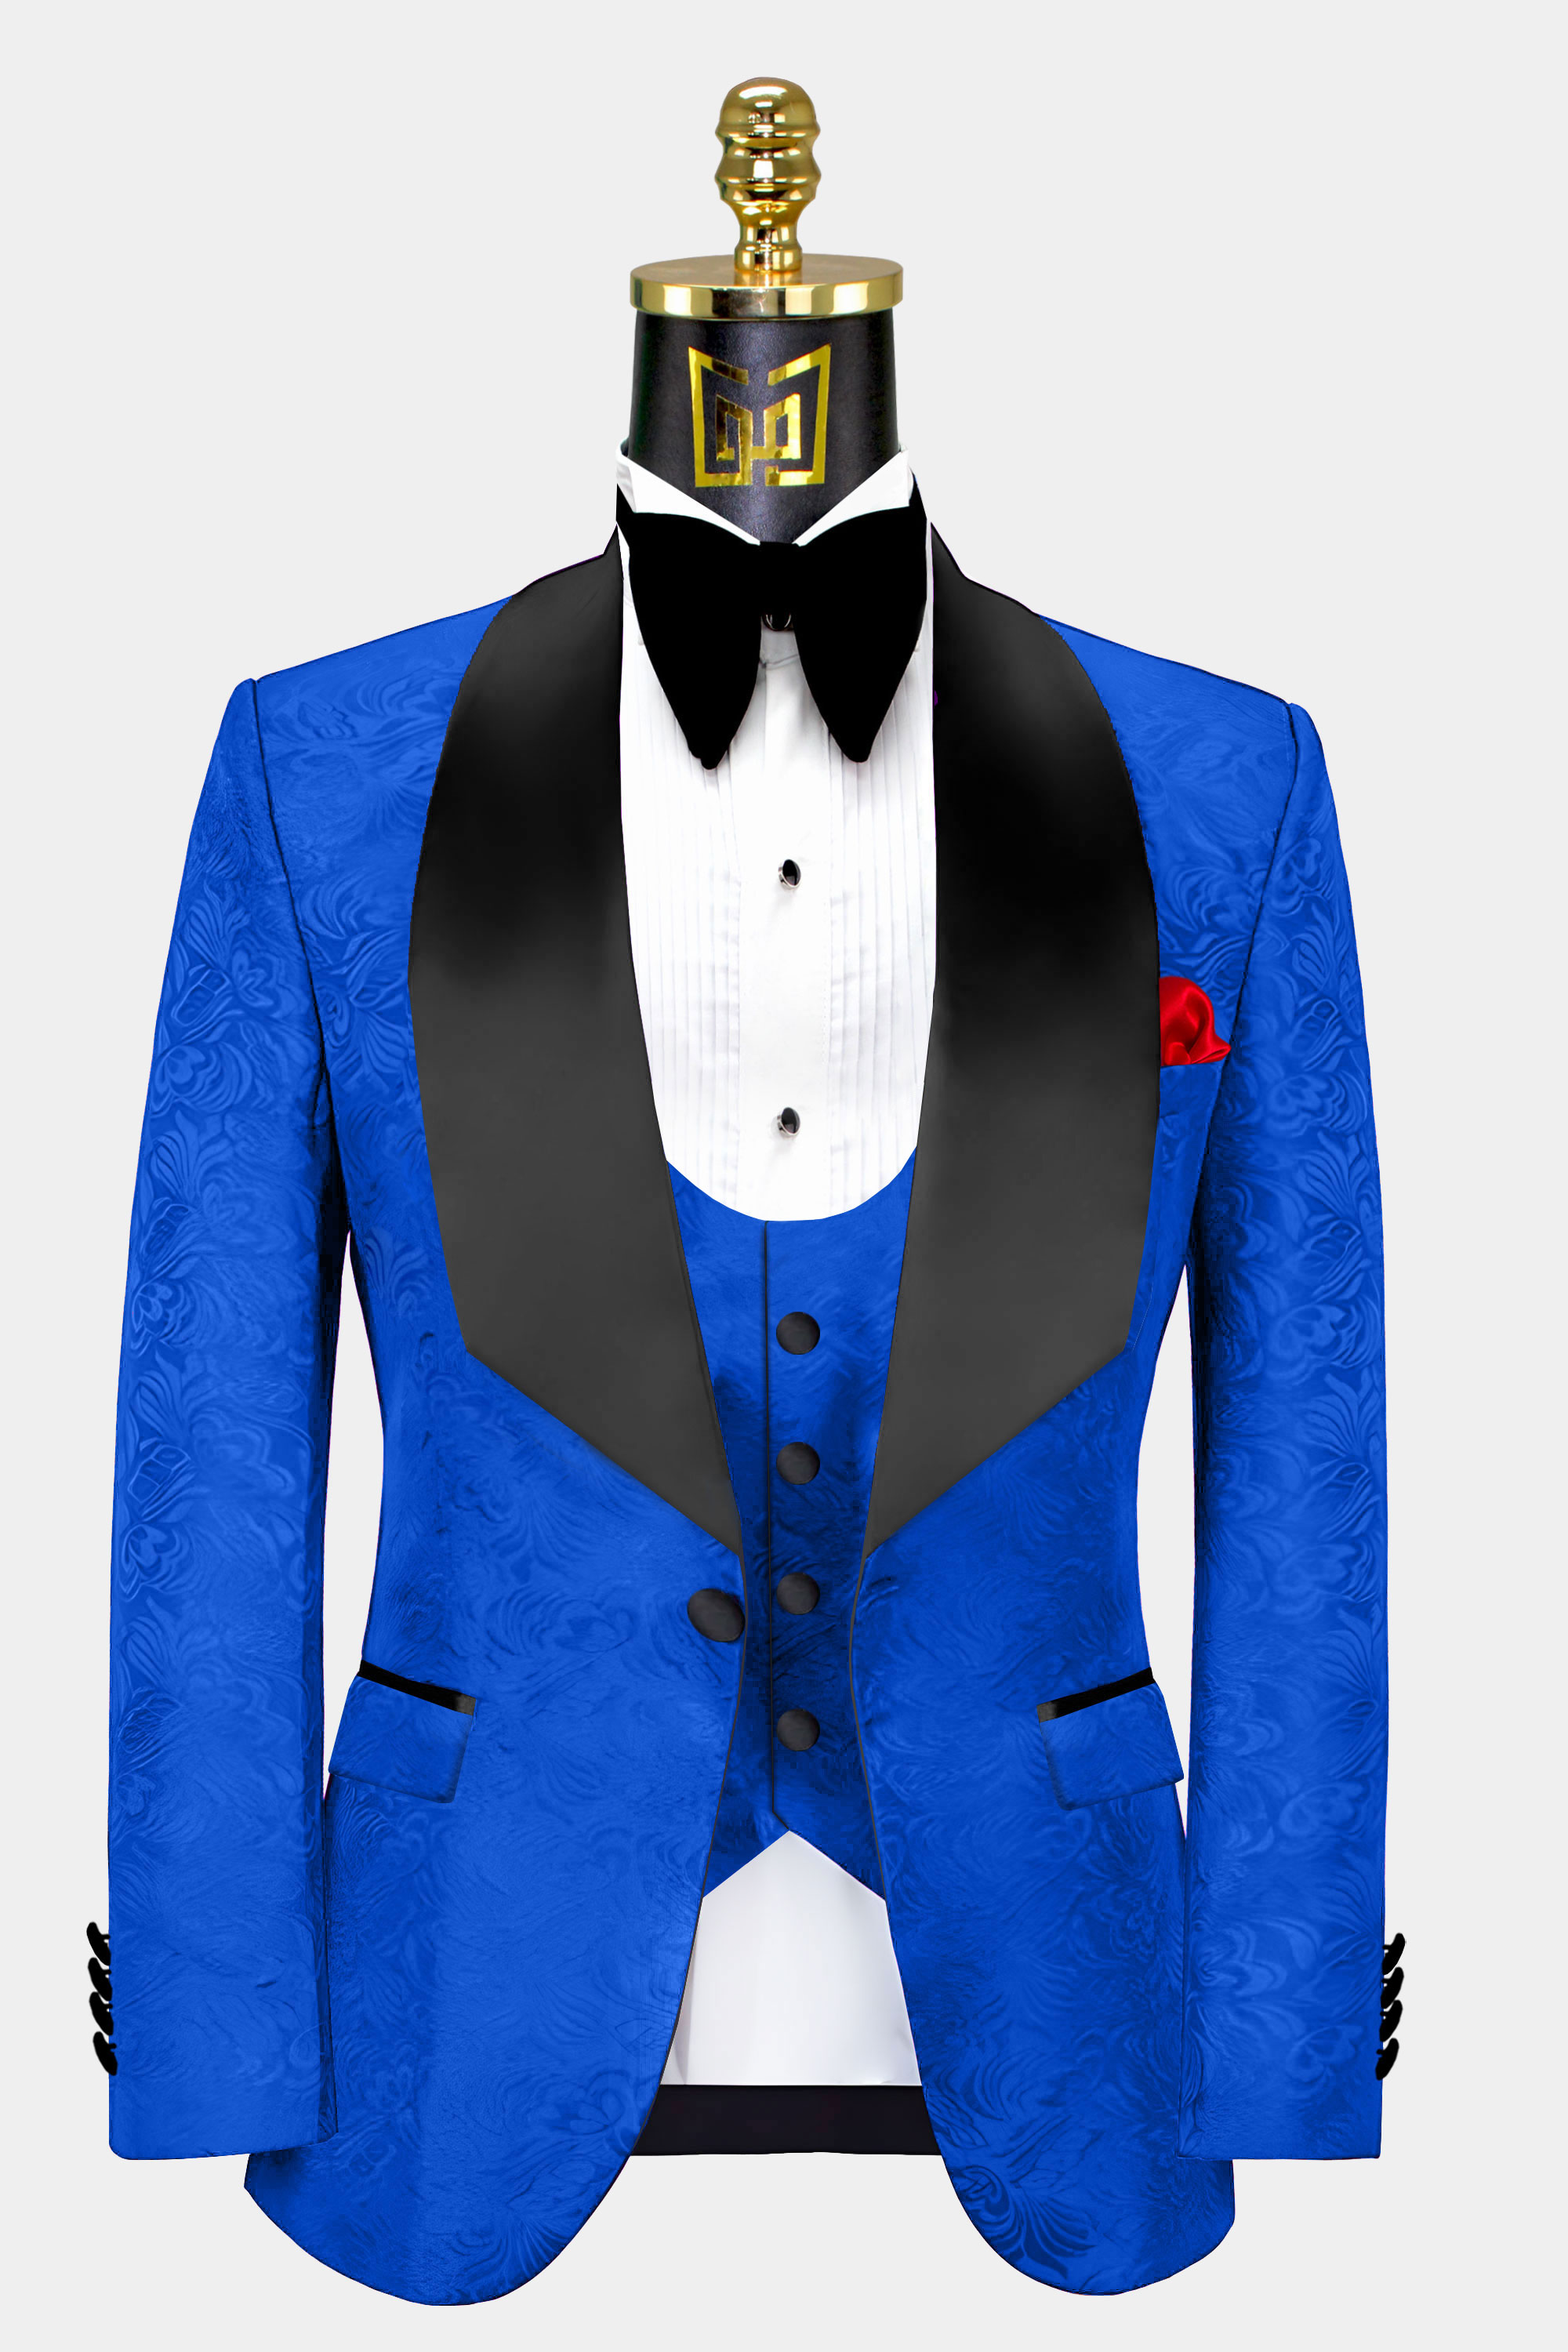 Royal-Blue-and-Black-Floral-Tuxedo-Groom-Wedding-Suit-Jacket-Blazer-from-Gentlemansguru.com